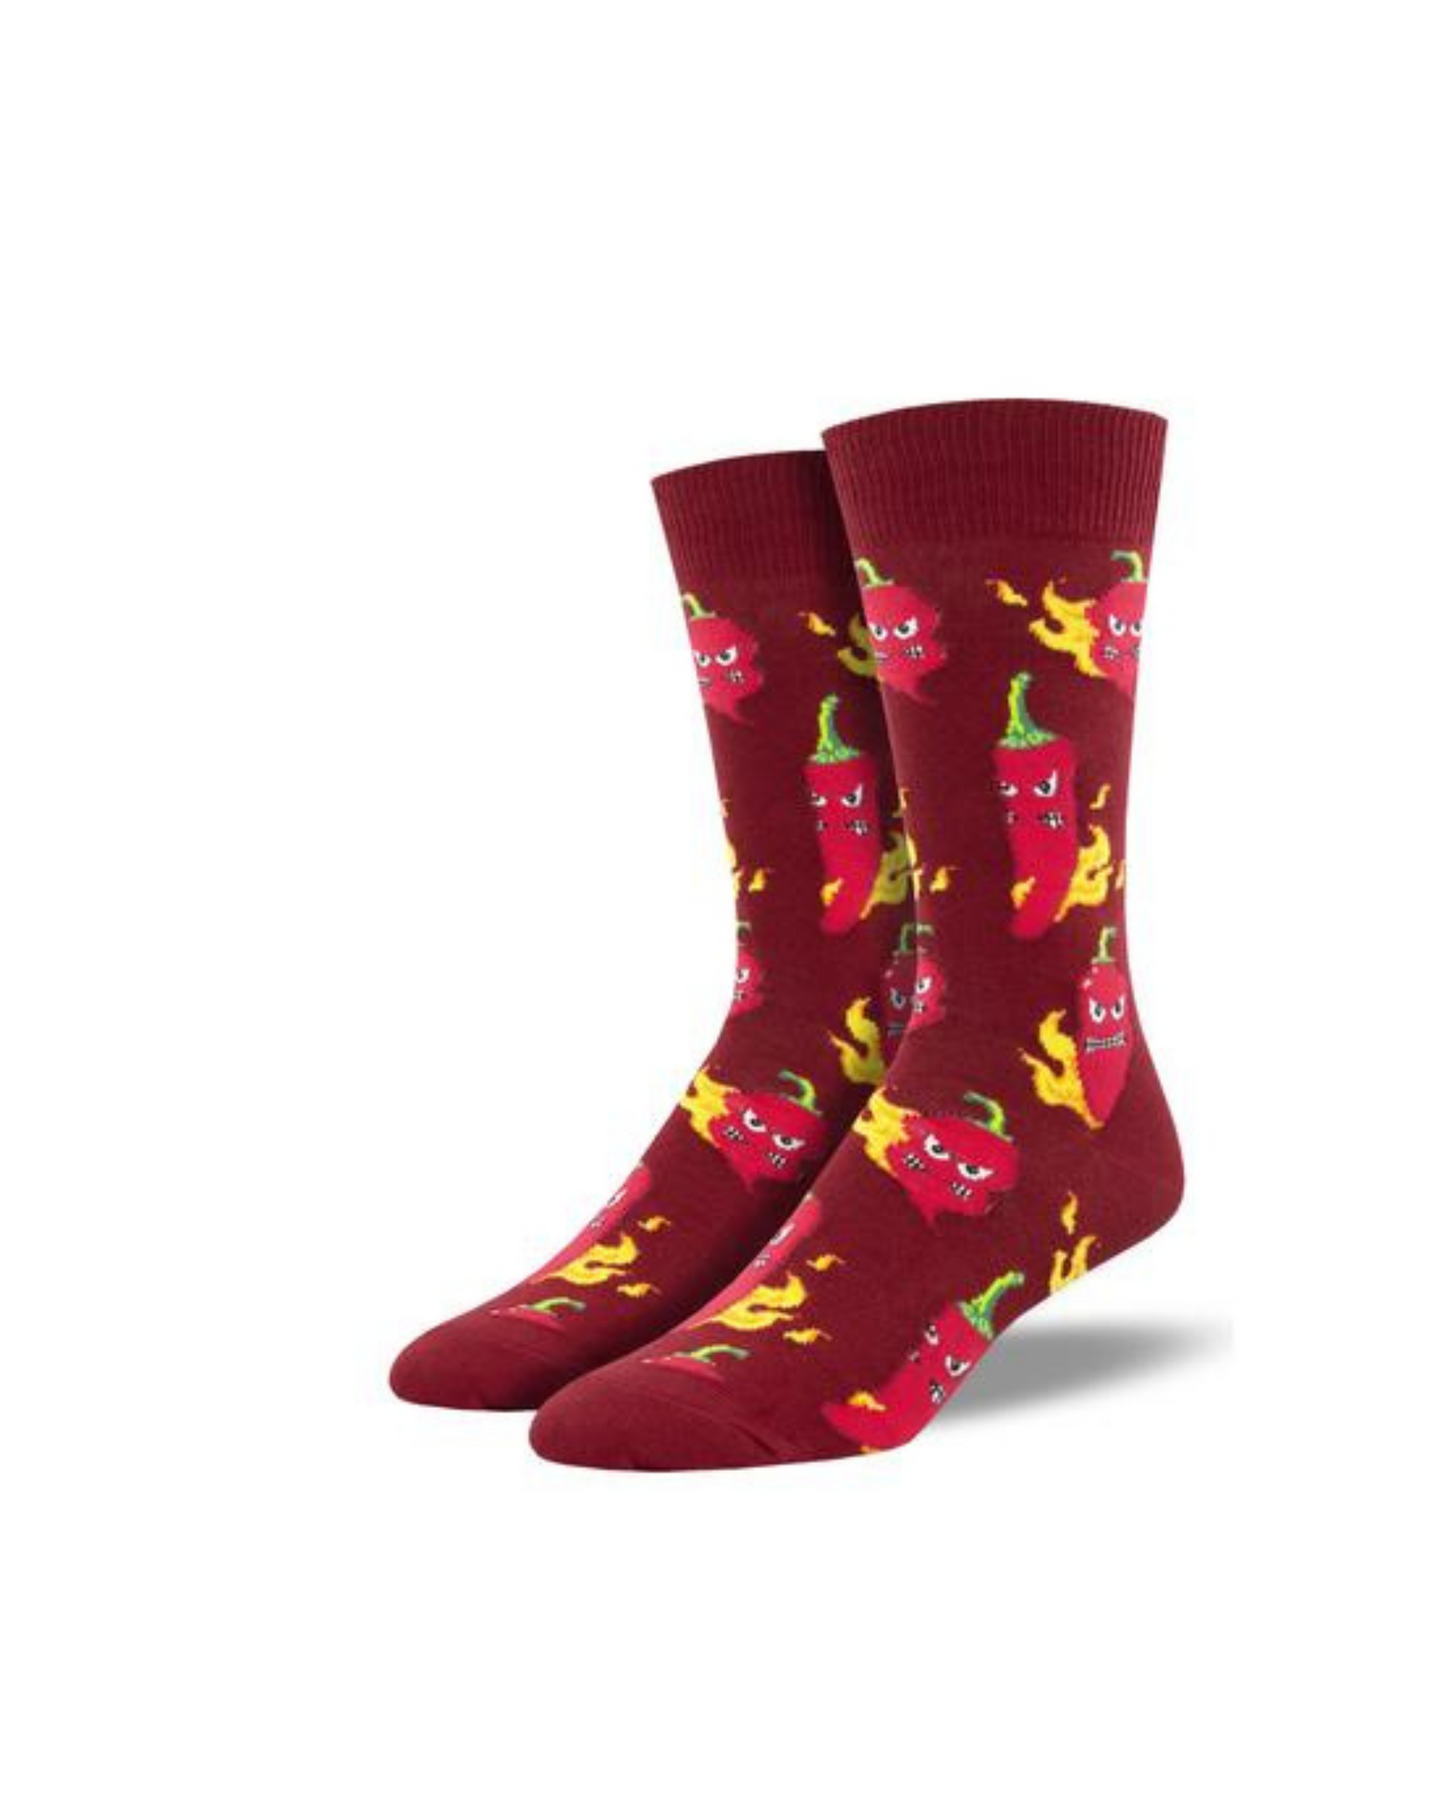 Socksmith Hot Stuff Socks - Red - 12_e7ee7a45-f3de-44e7-bb9a-36e9721c1cae